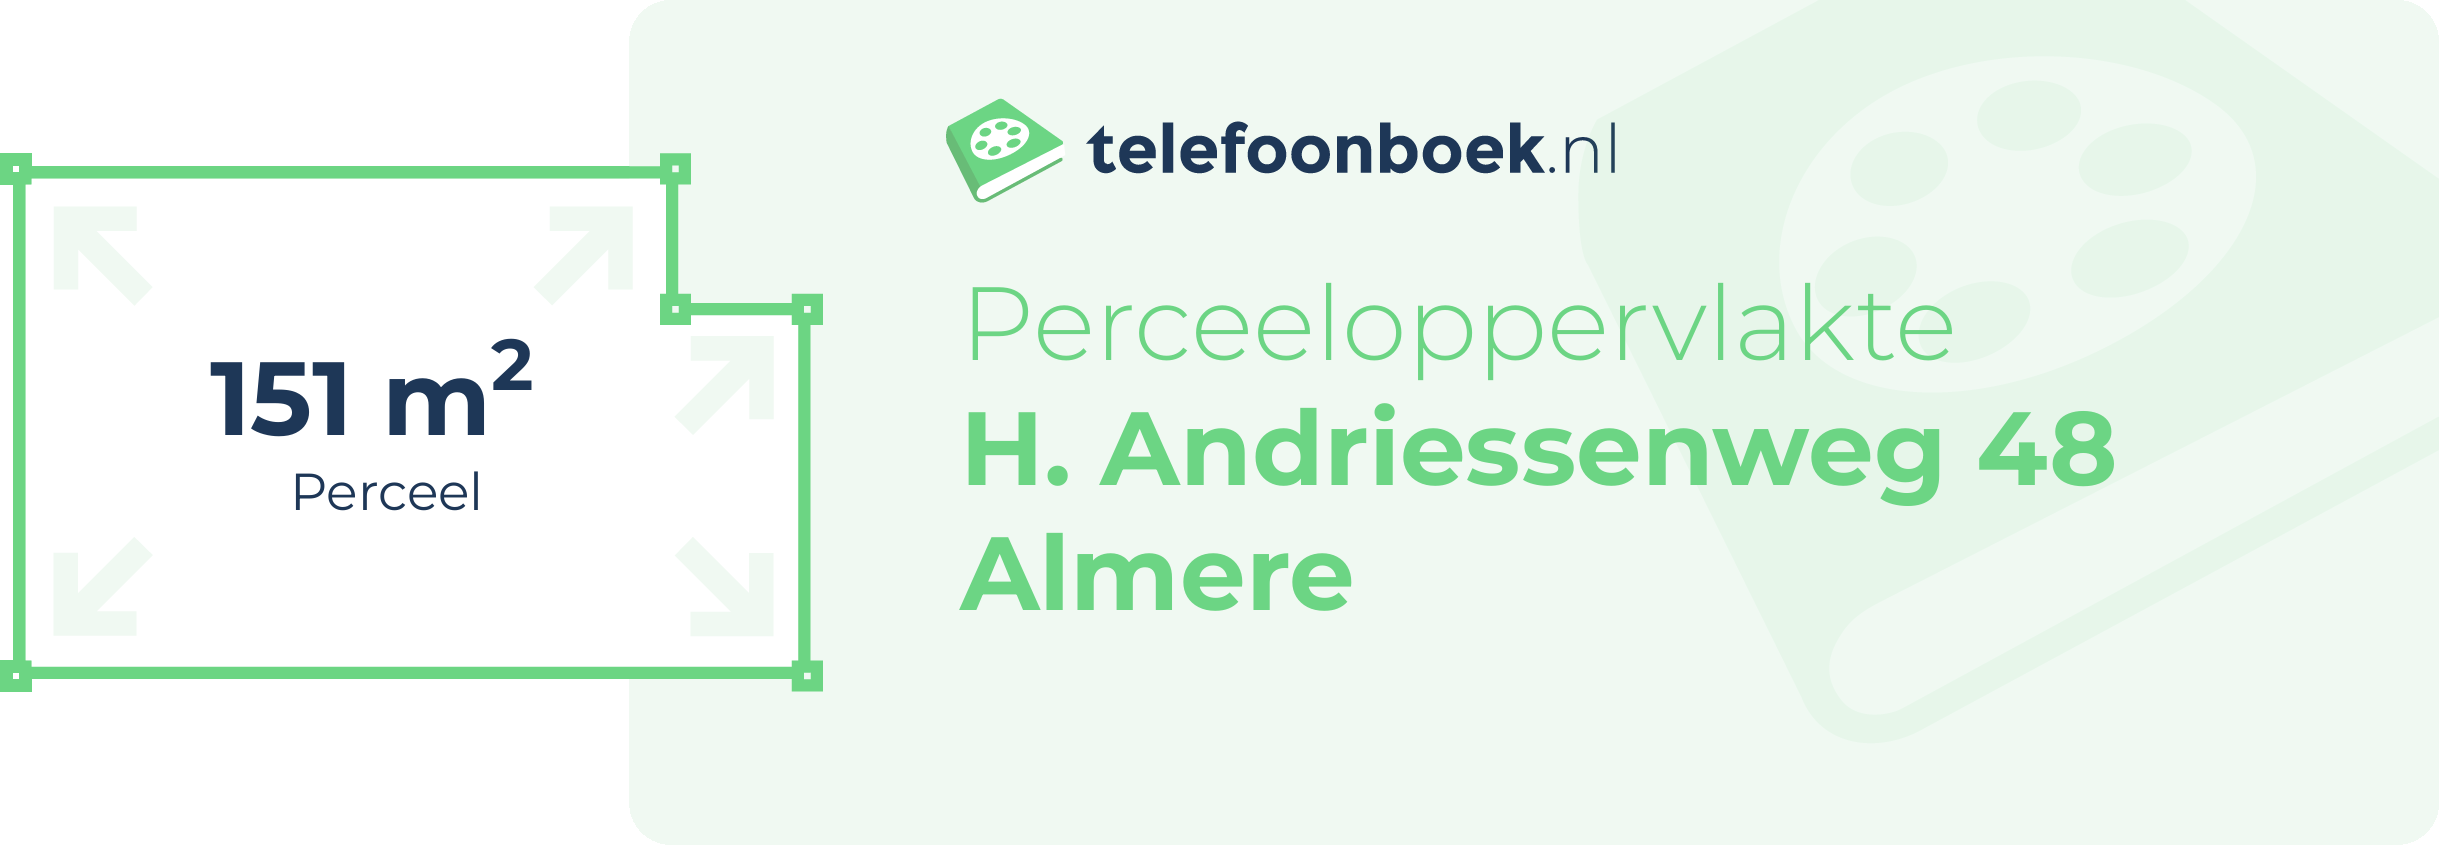 Perceeloppervlakte H. Andriessenweg 48 Almere